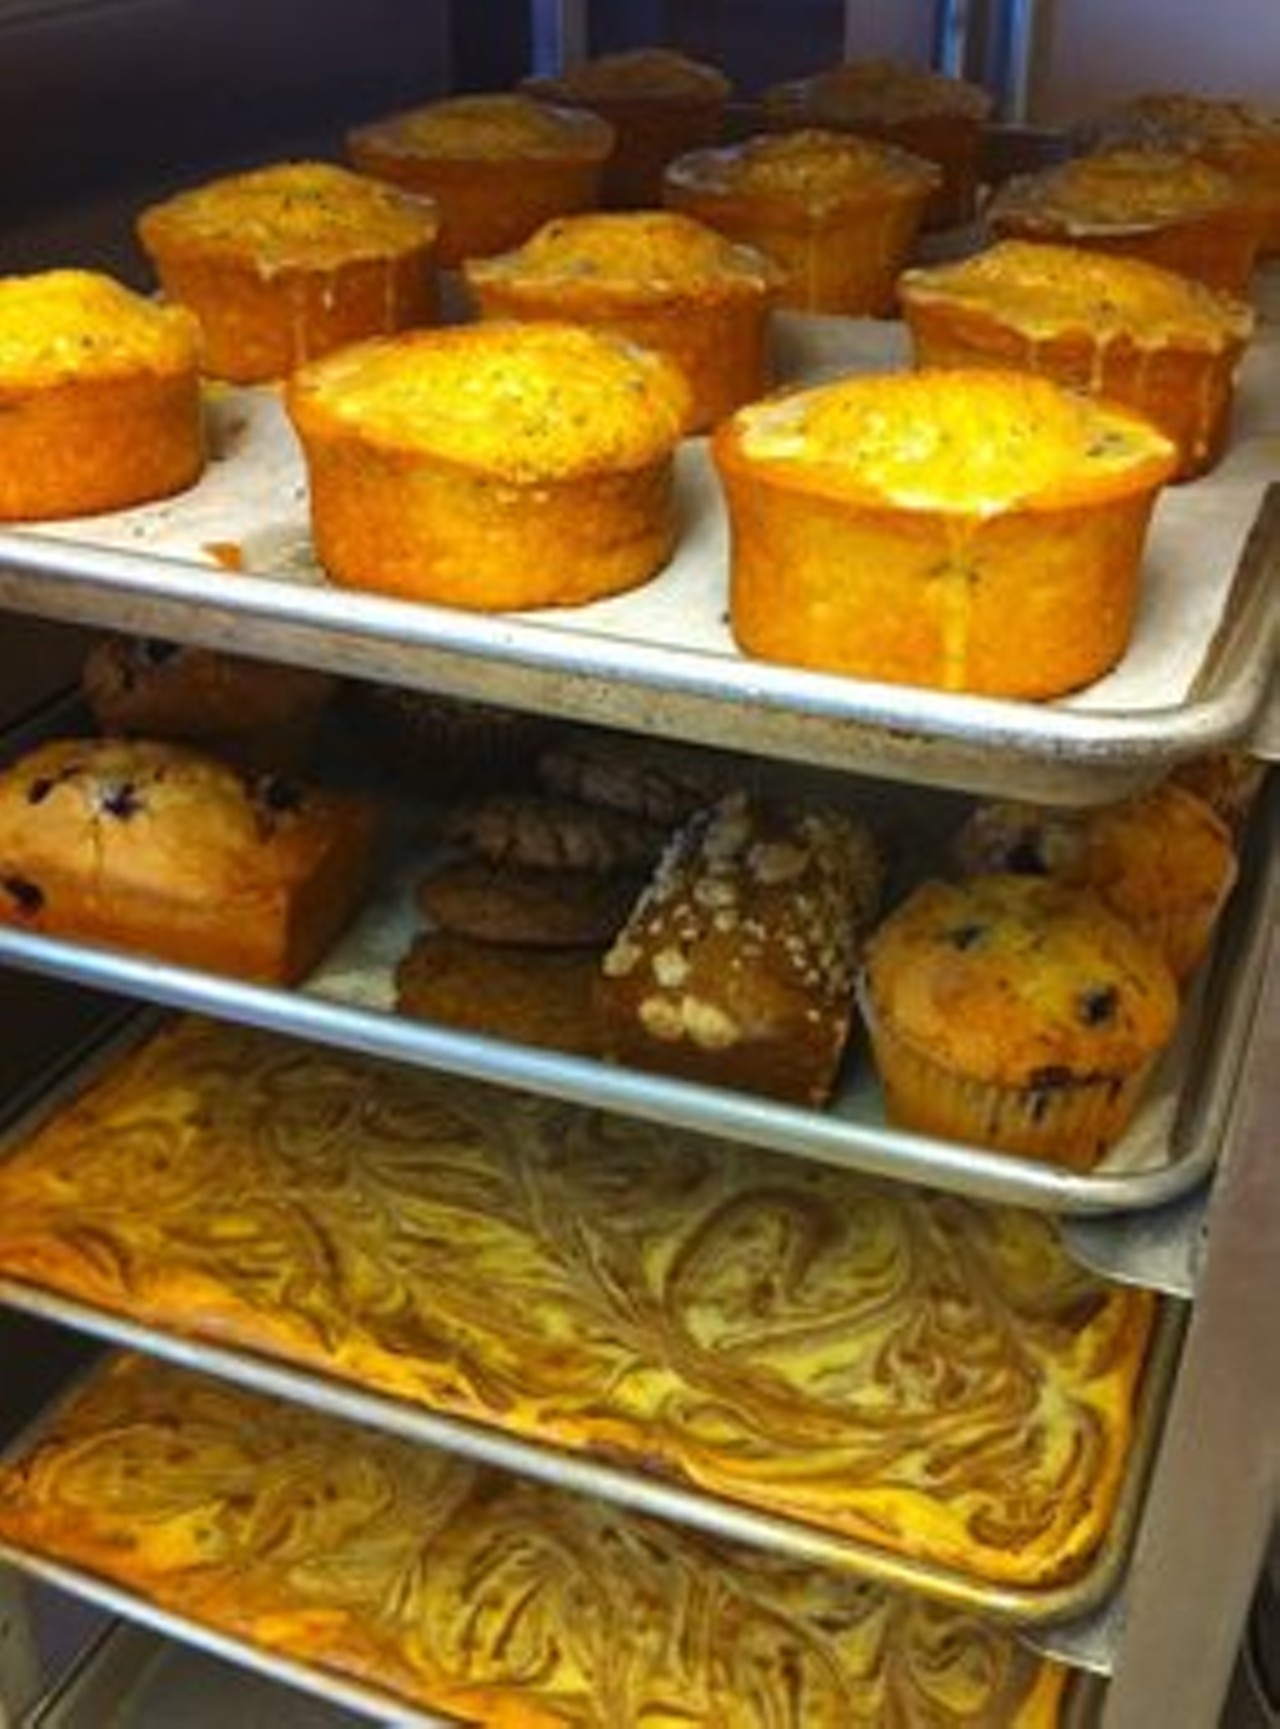 4 Seasons Baked Goods & Catering | St. Charles | Bakery, Pastries | Restaurants